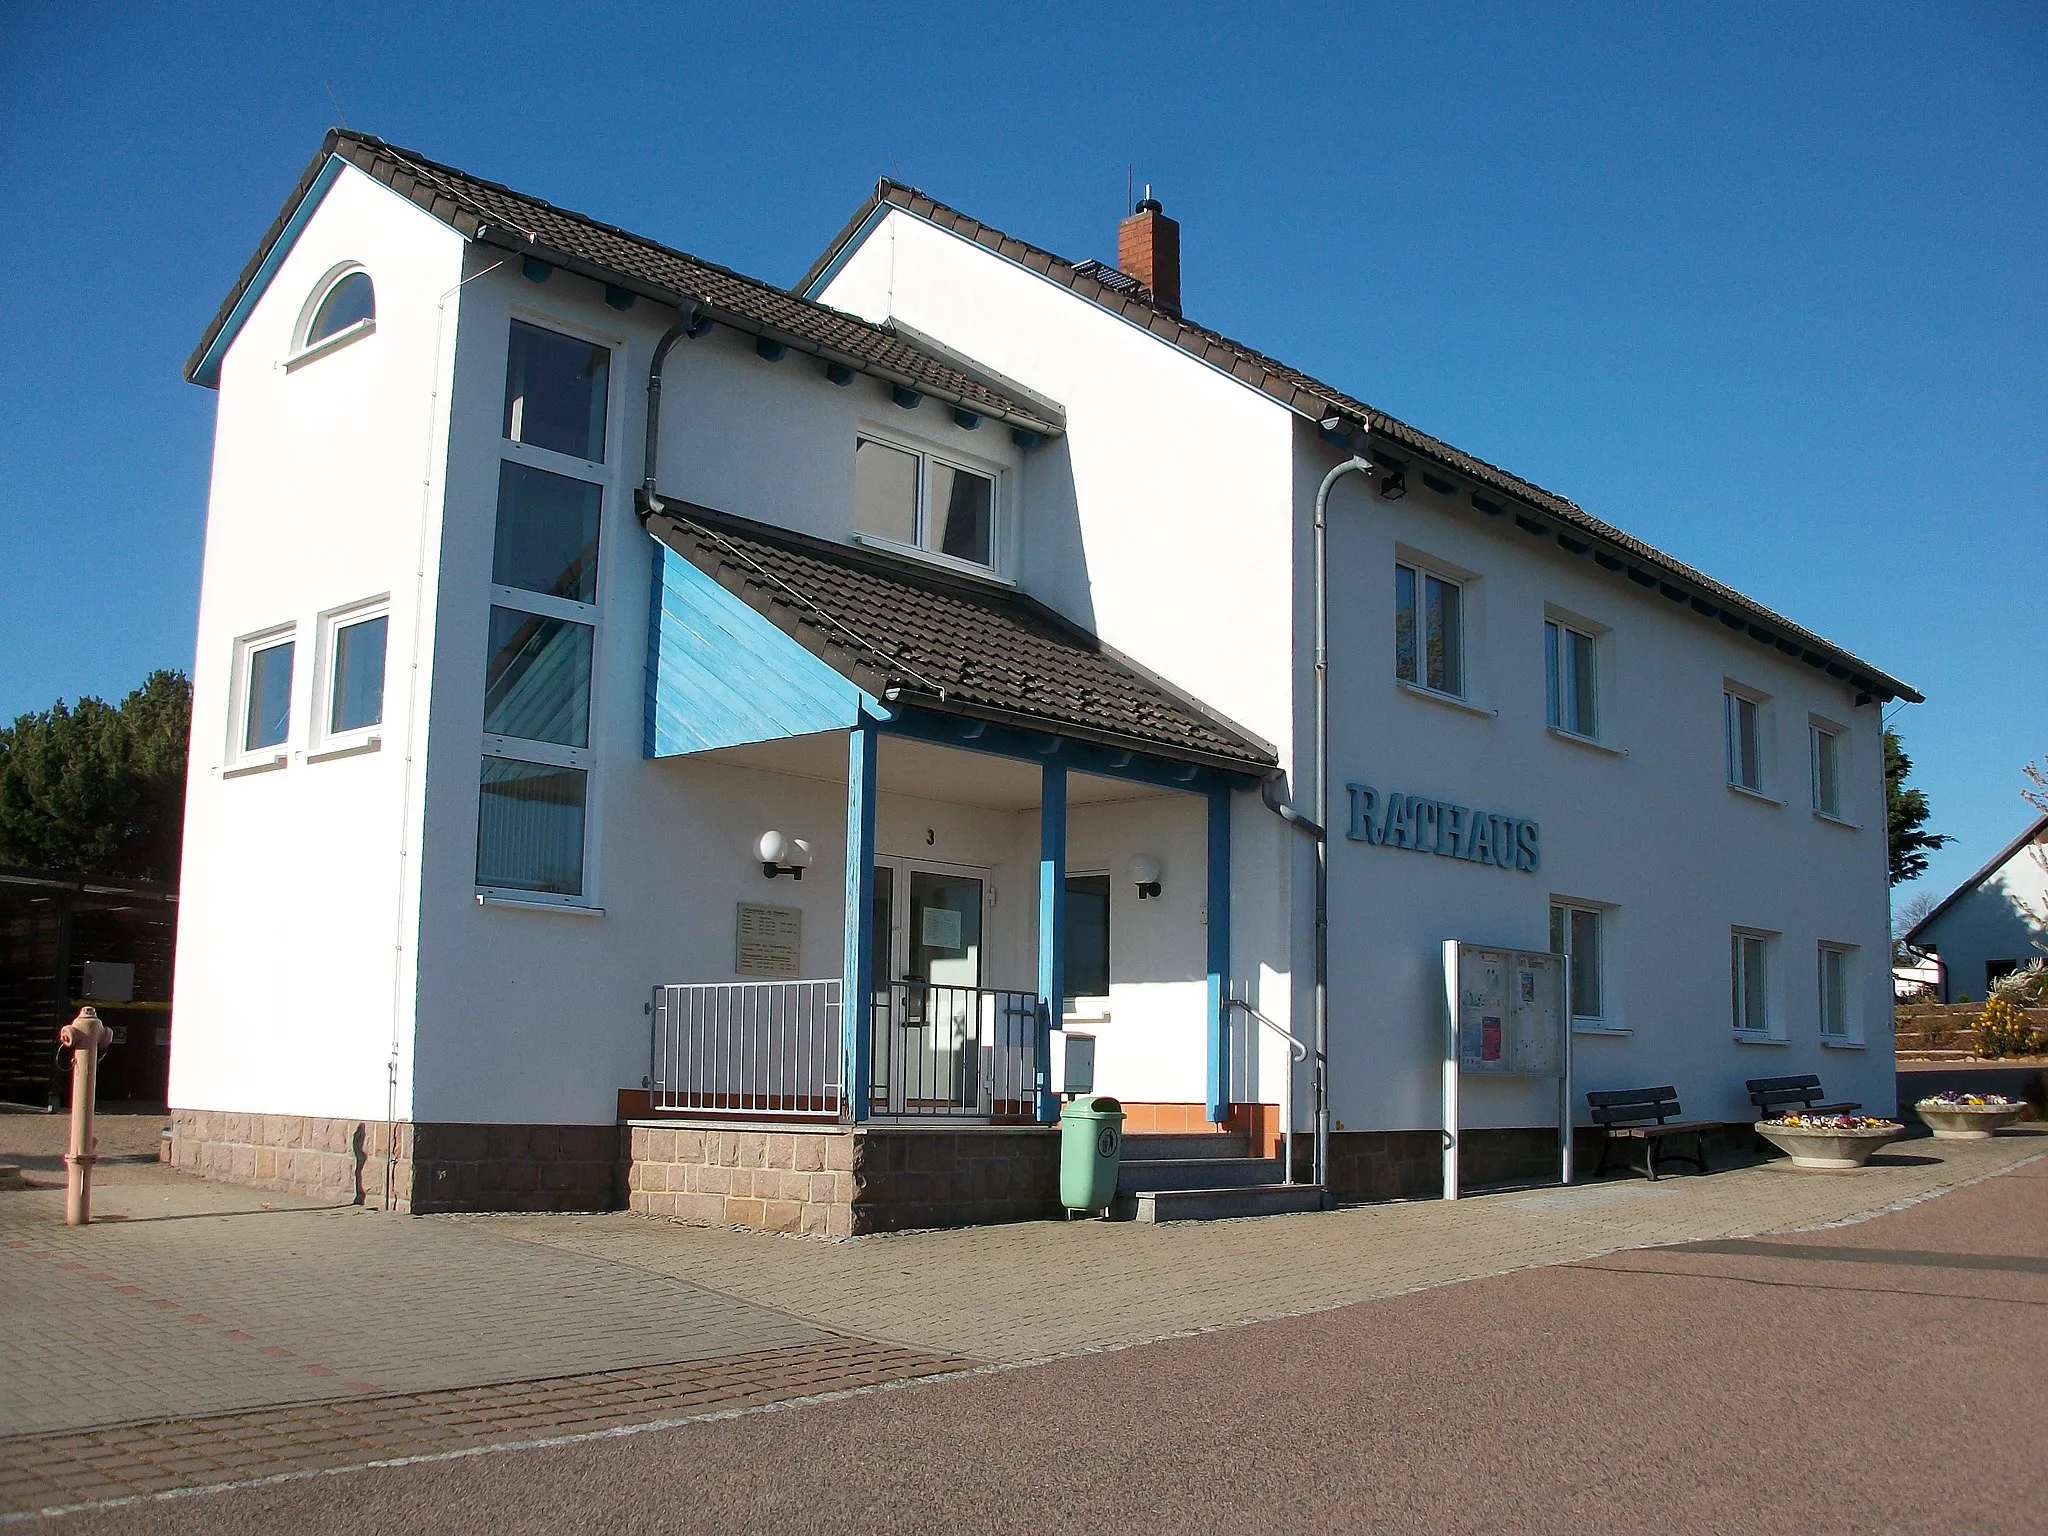 Photo showing: Rathaus Königshain-Wiederau in Wiederau